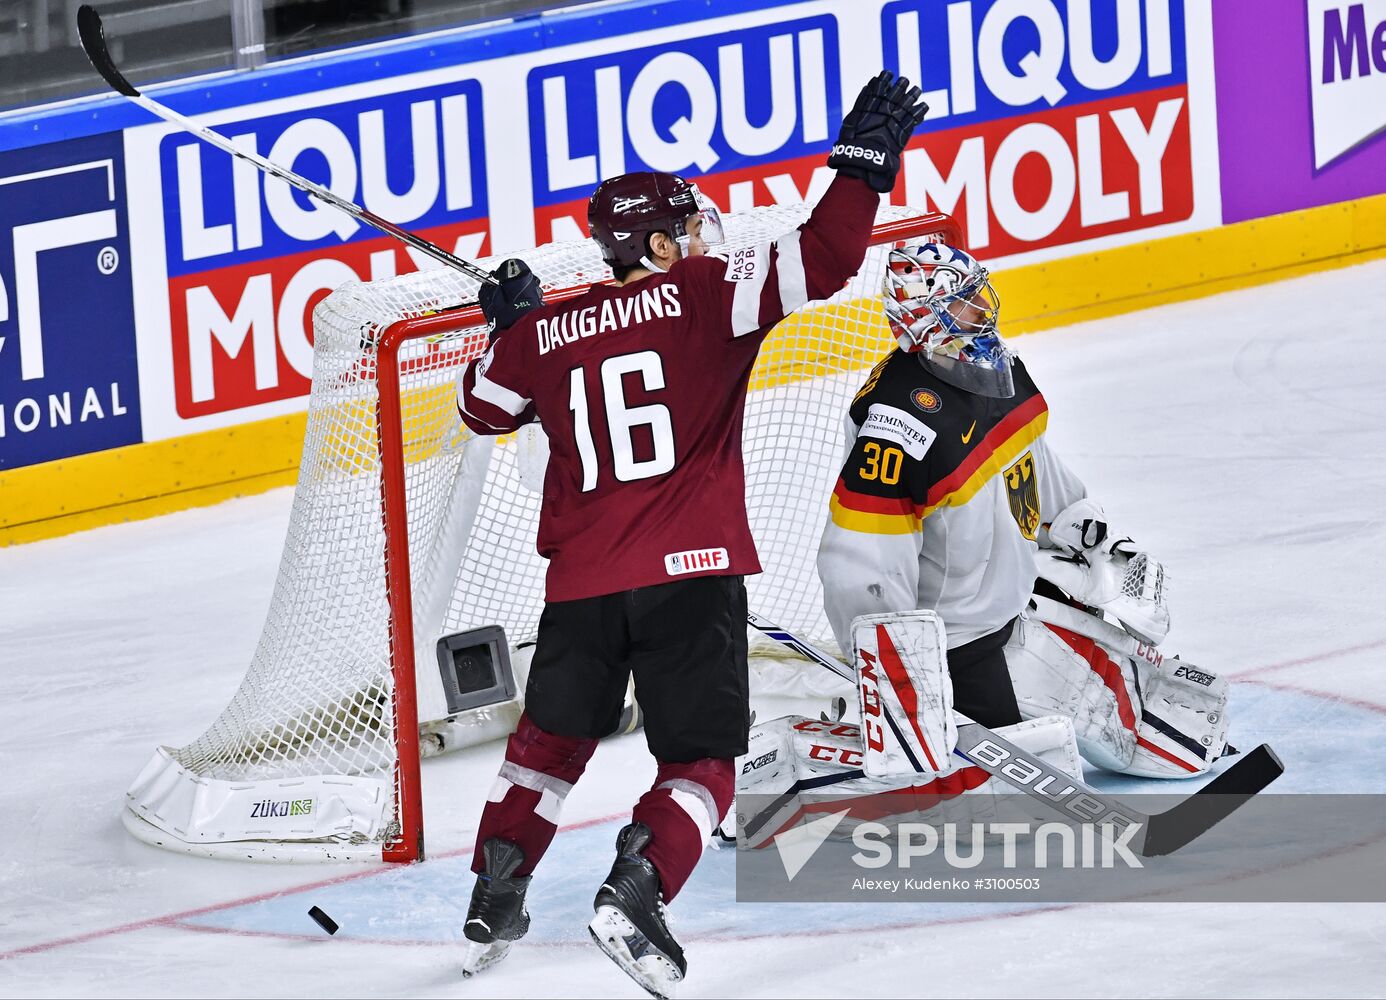 2017 IIHF World Championships. Germany vs. Latvia